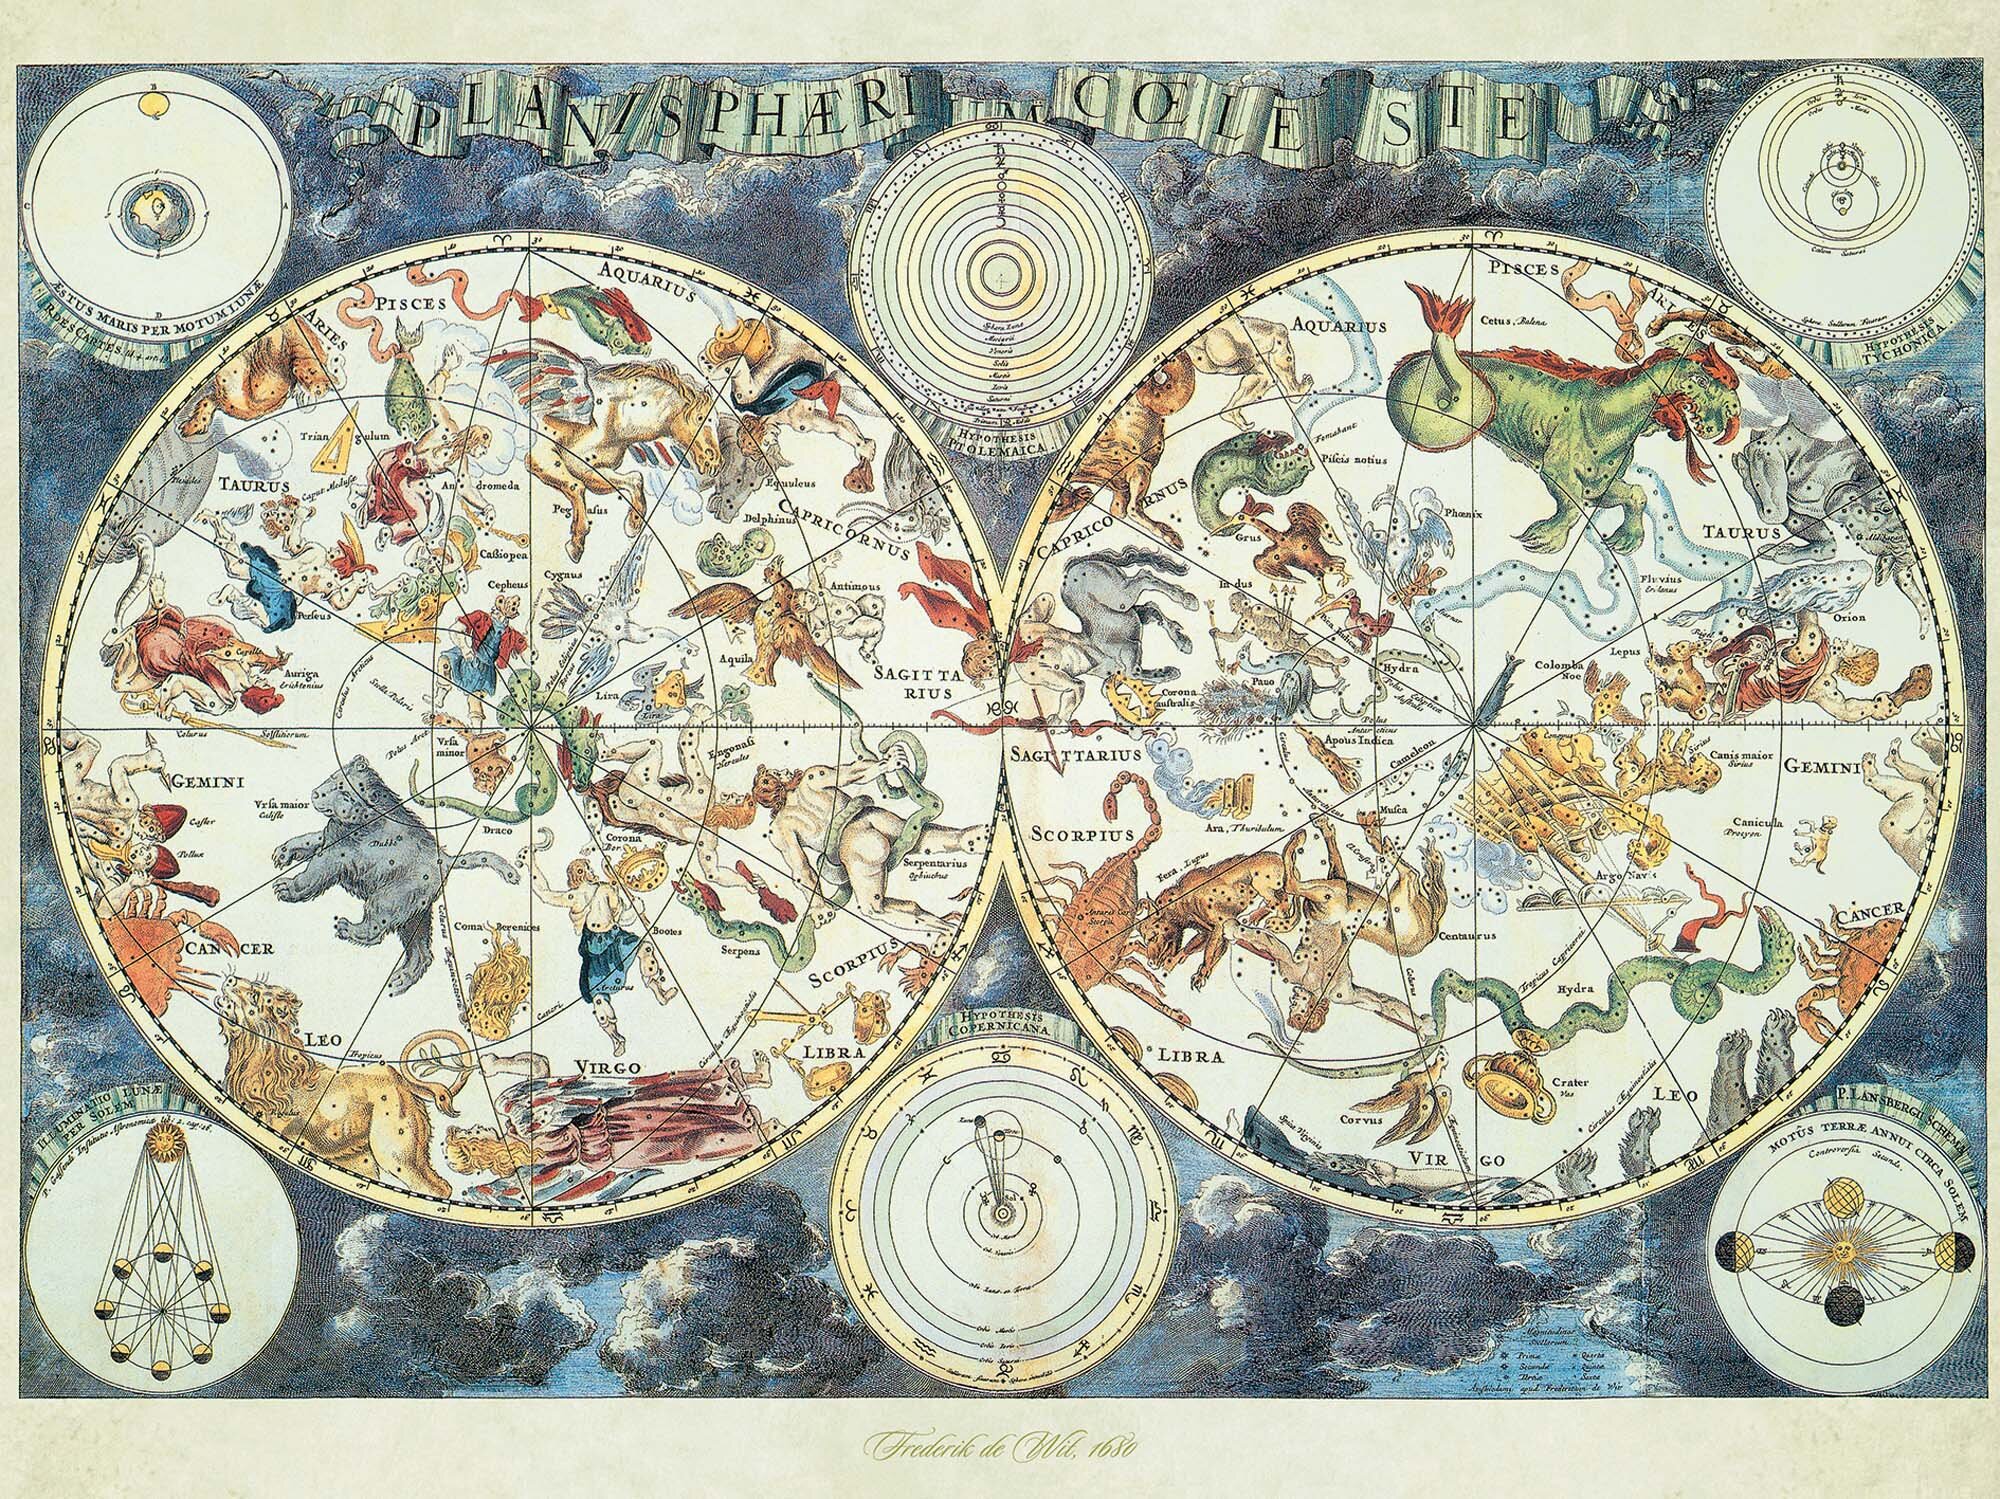 Ravensburger Palapeli, Worldmap of Fantastical Beasts 1500 palaa